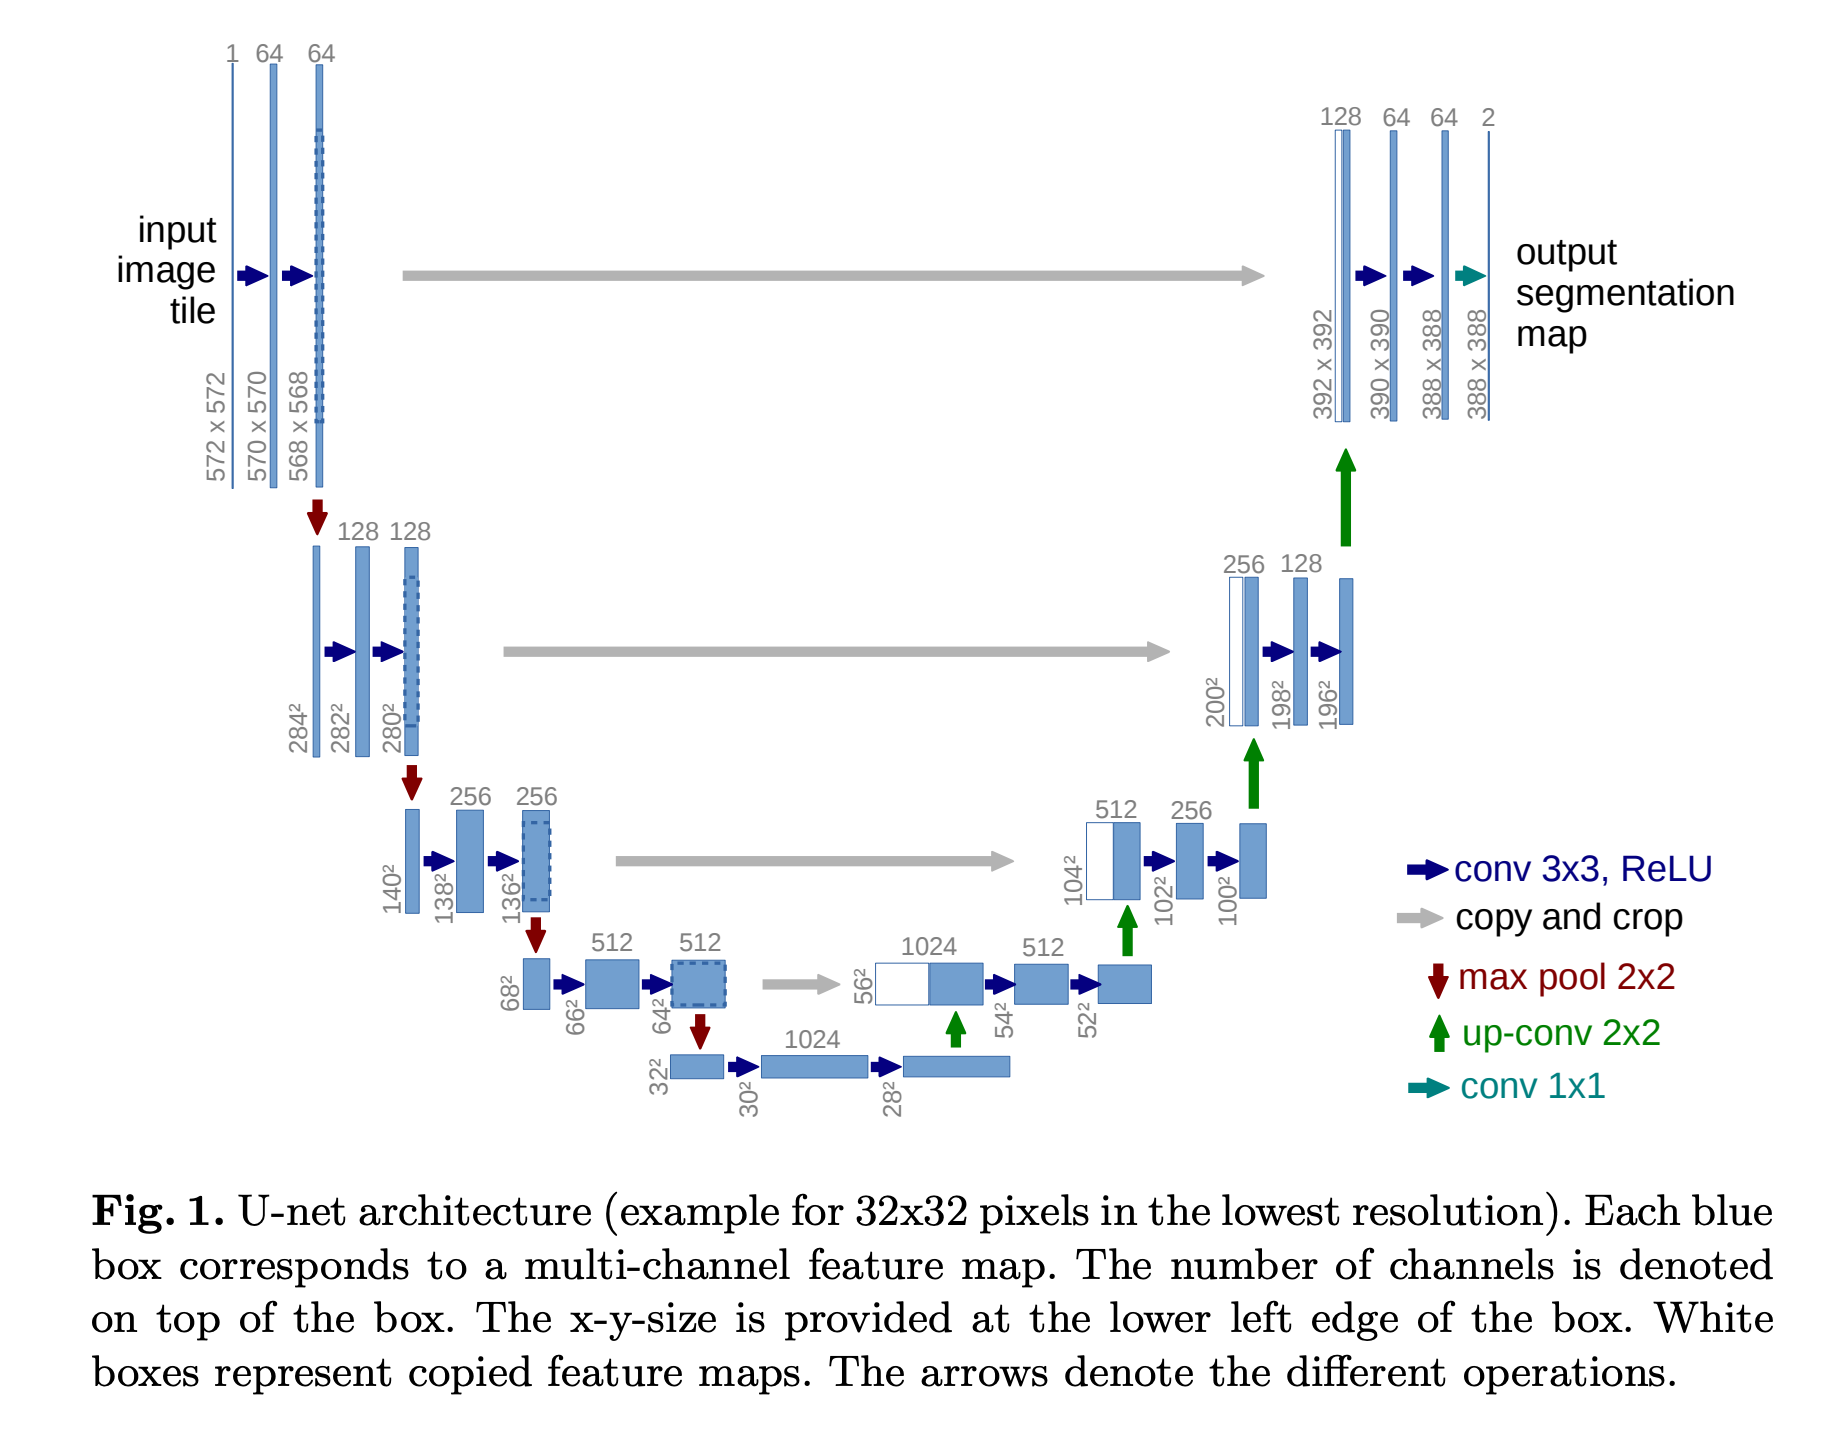 Source: [U-Net: Convolutional Networks for Biomedical Image Segmentation](https://arxiv.org/pdf/1505.04597v1.pdf)